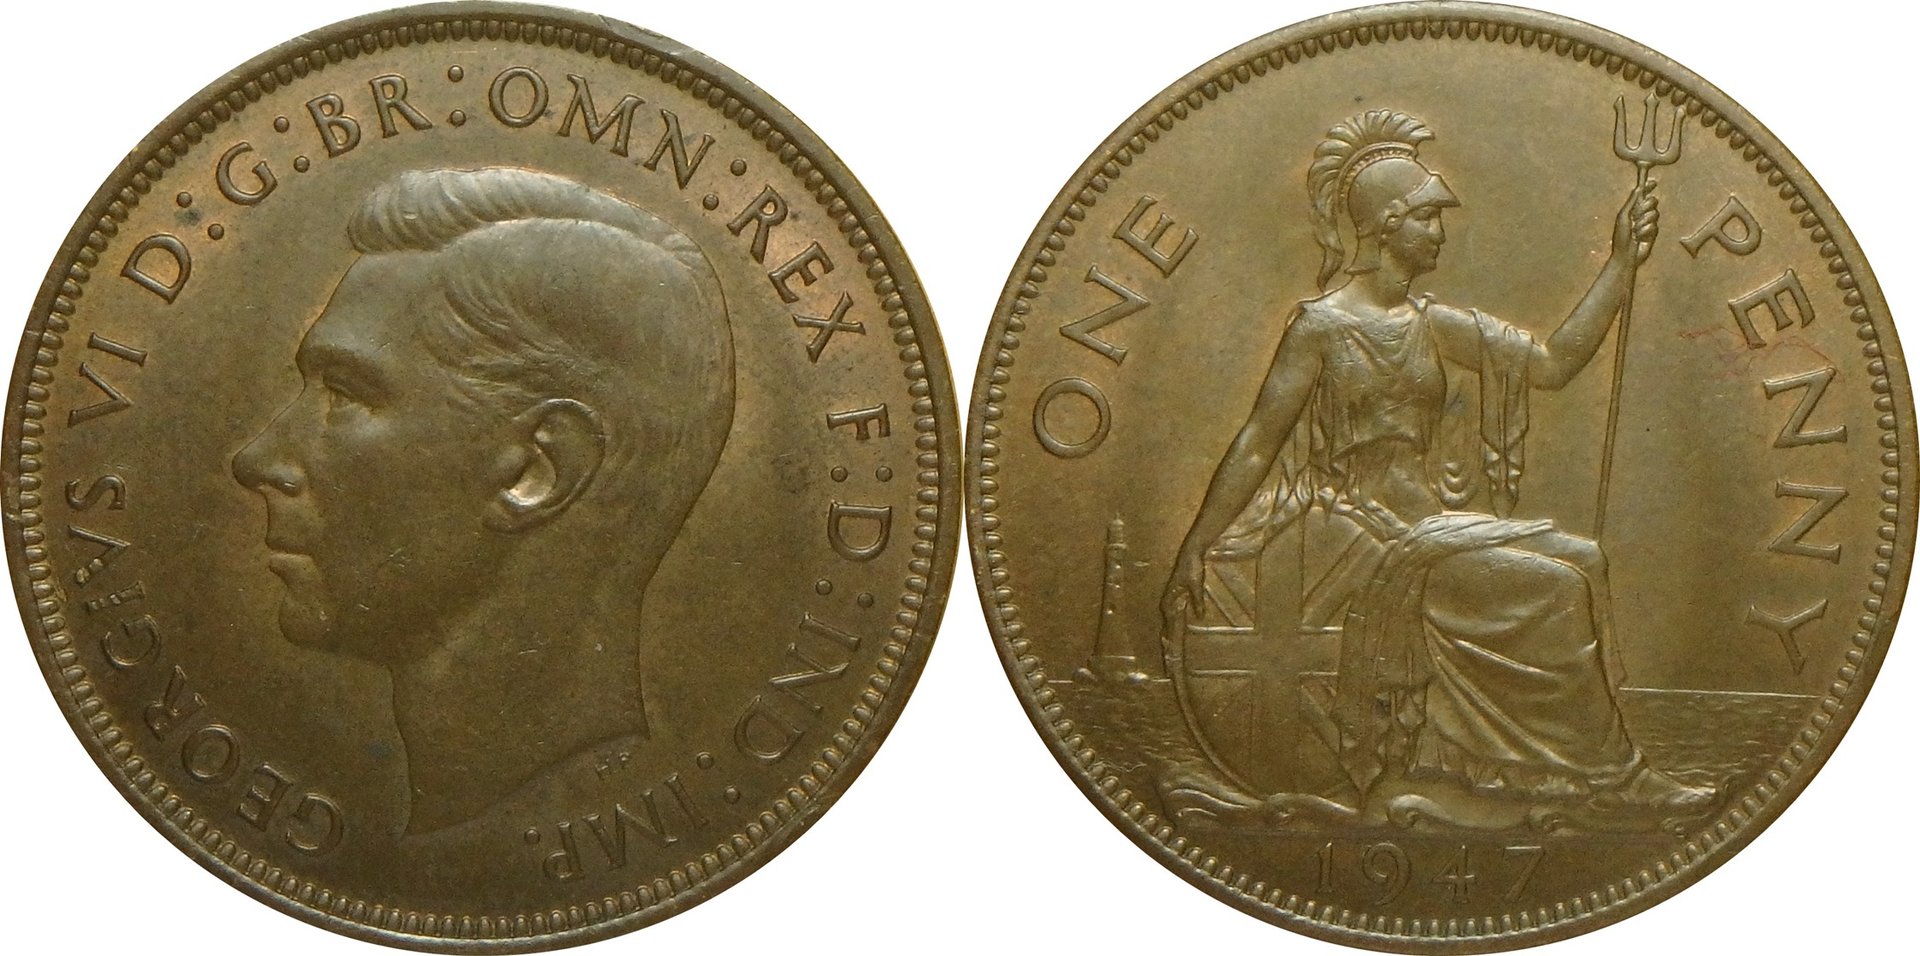 1947 GB 1 p.jpg